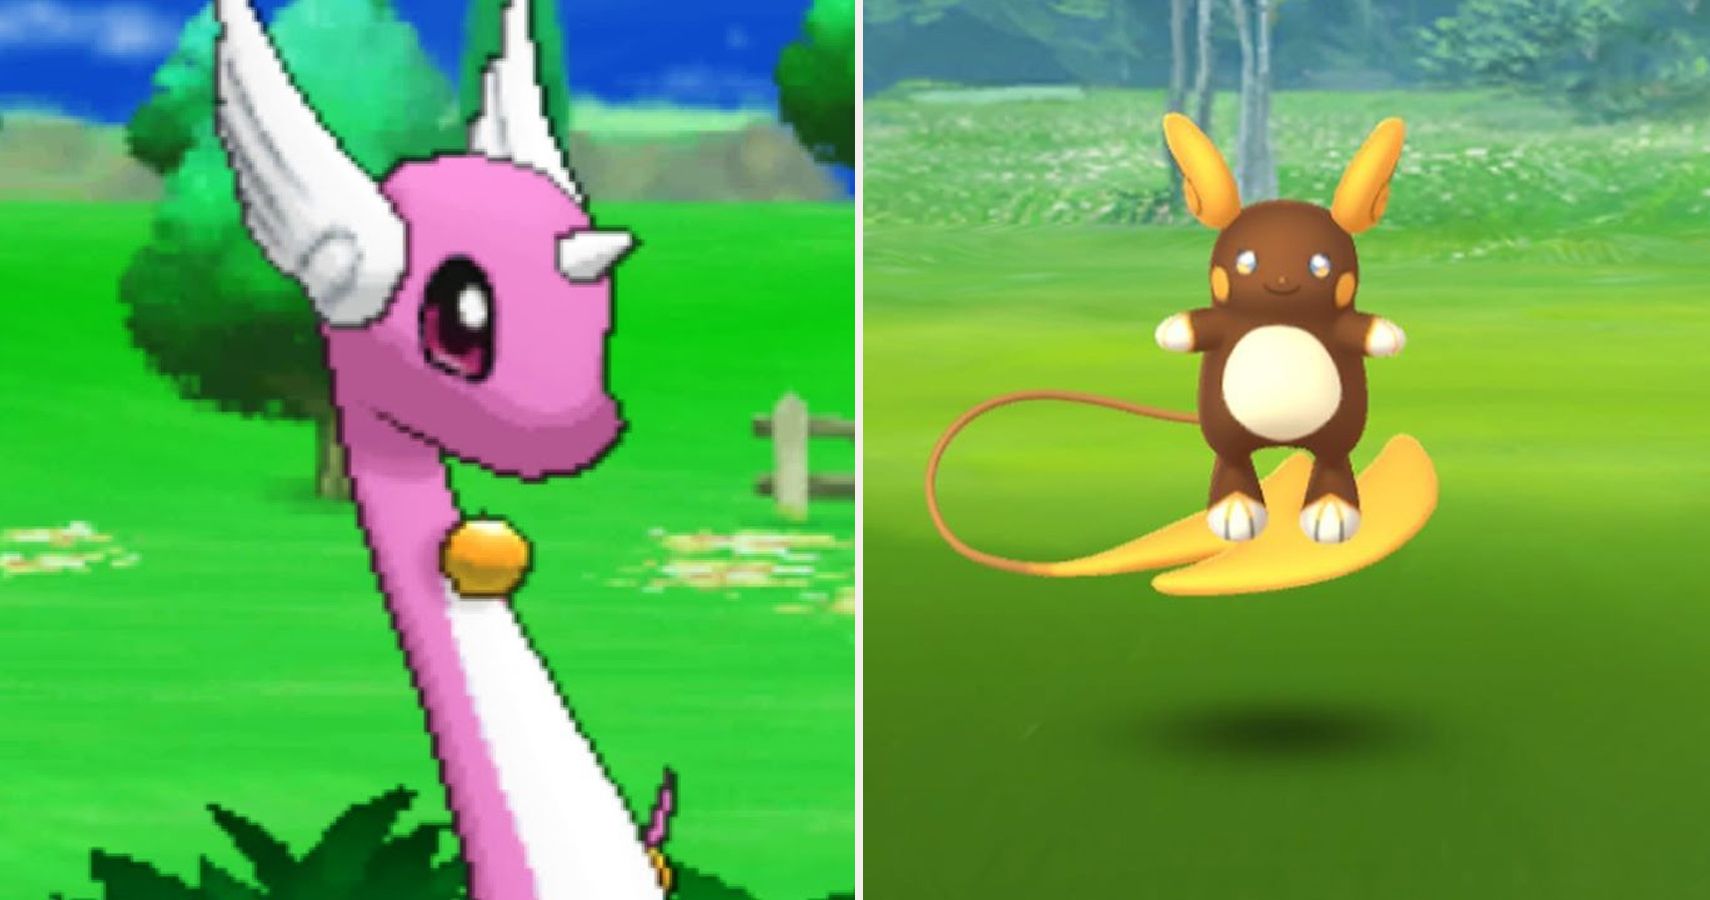 10 Shiny Pokémon That Are Worse Than The Originals